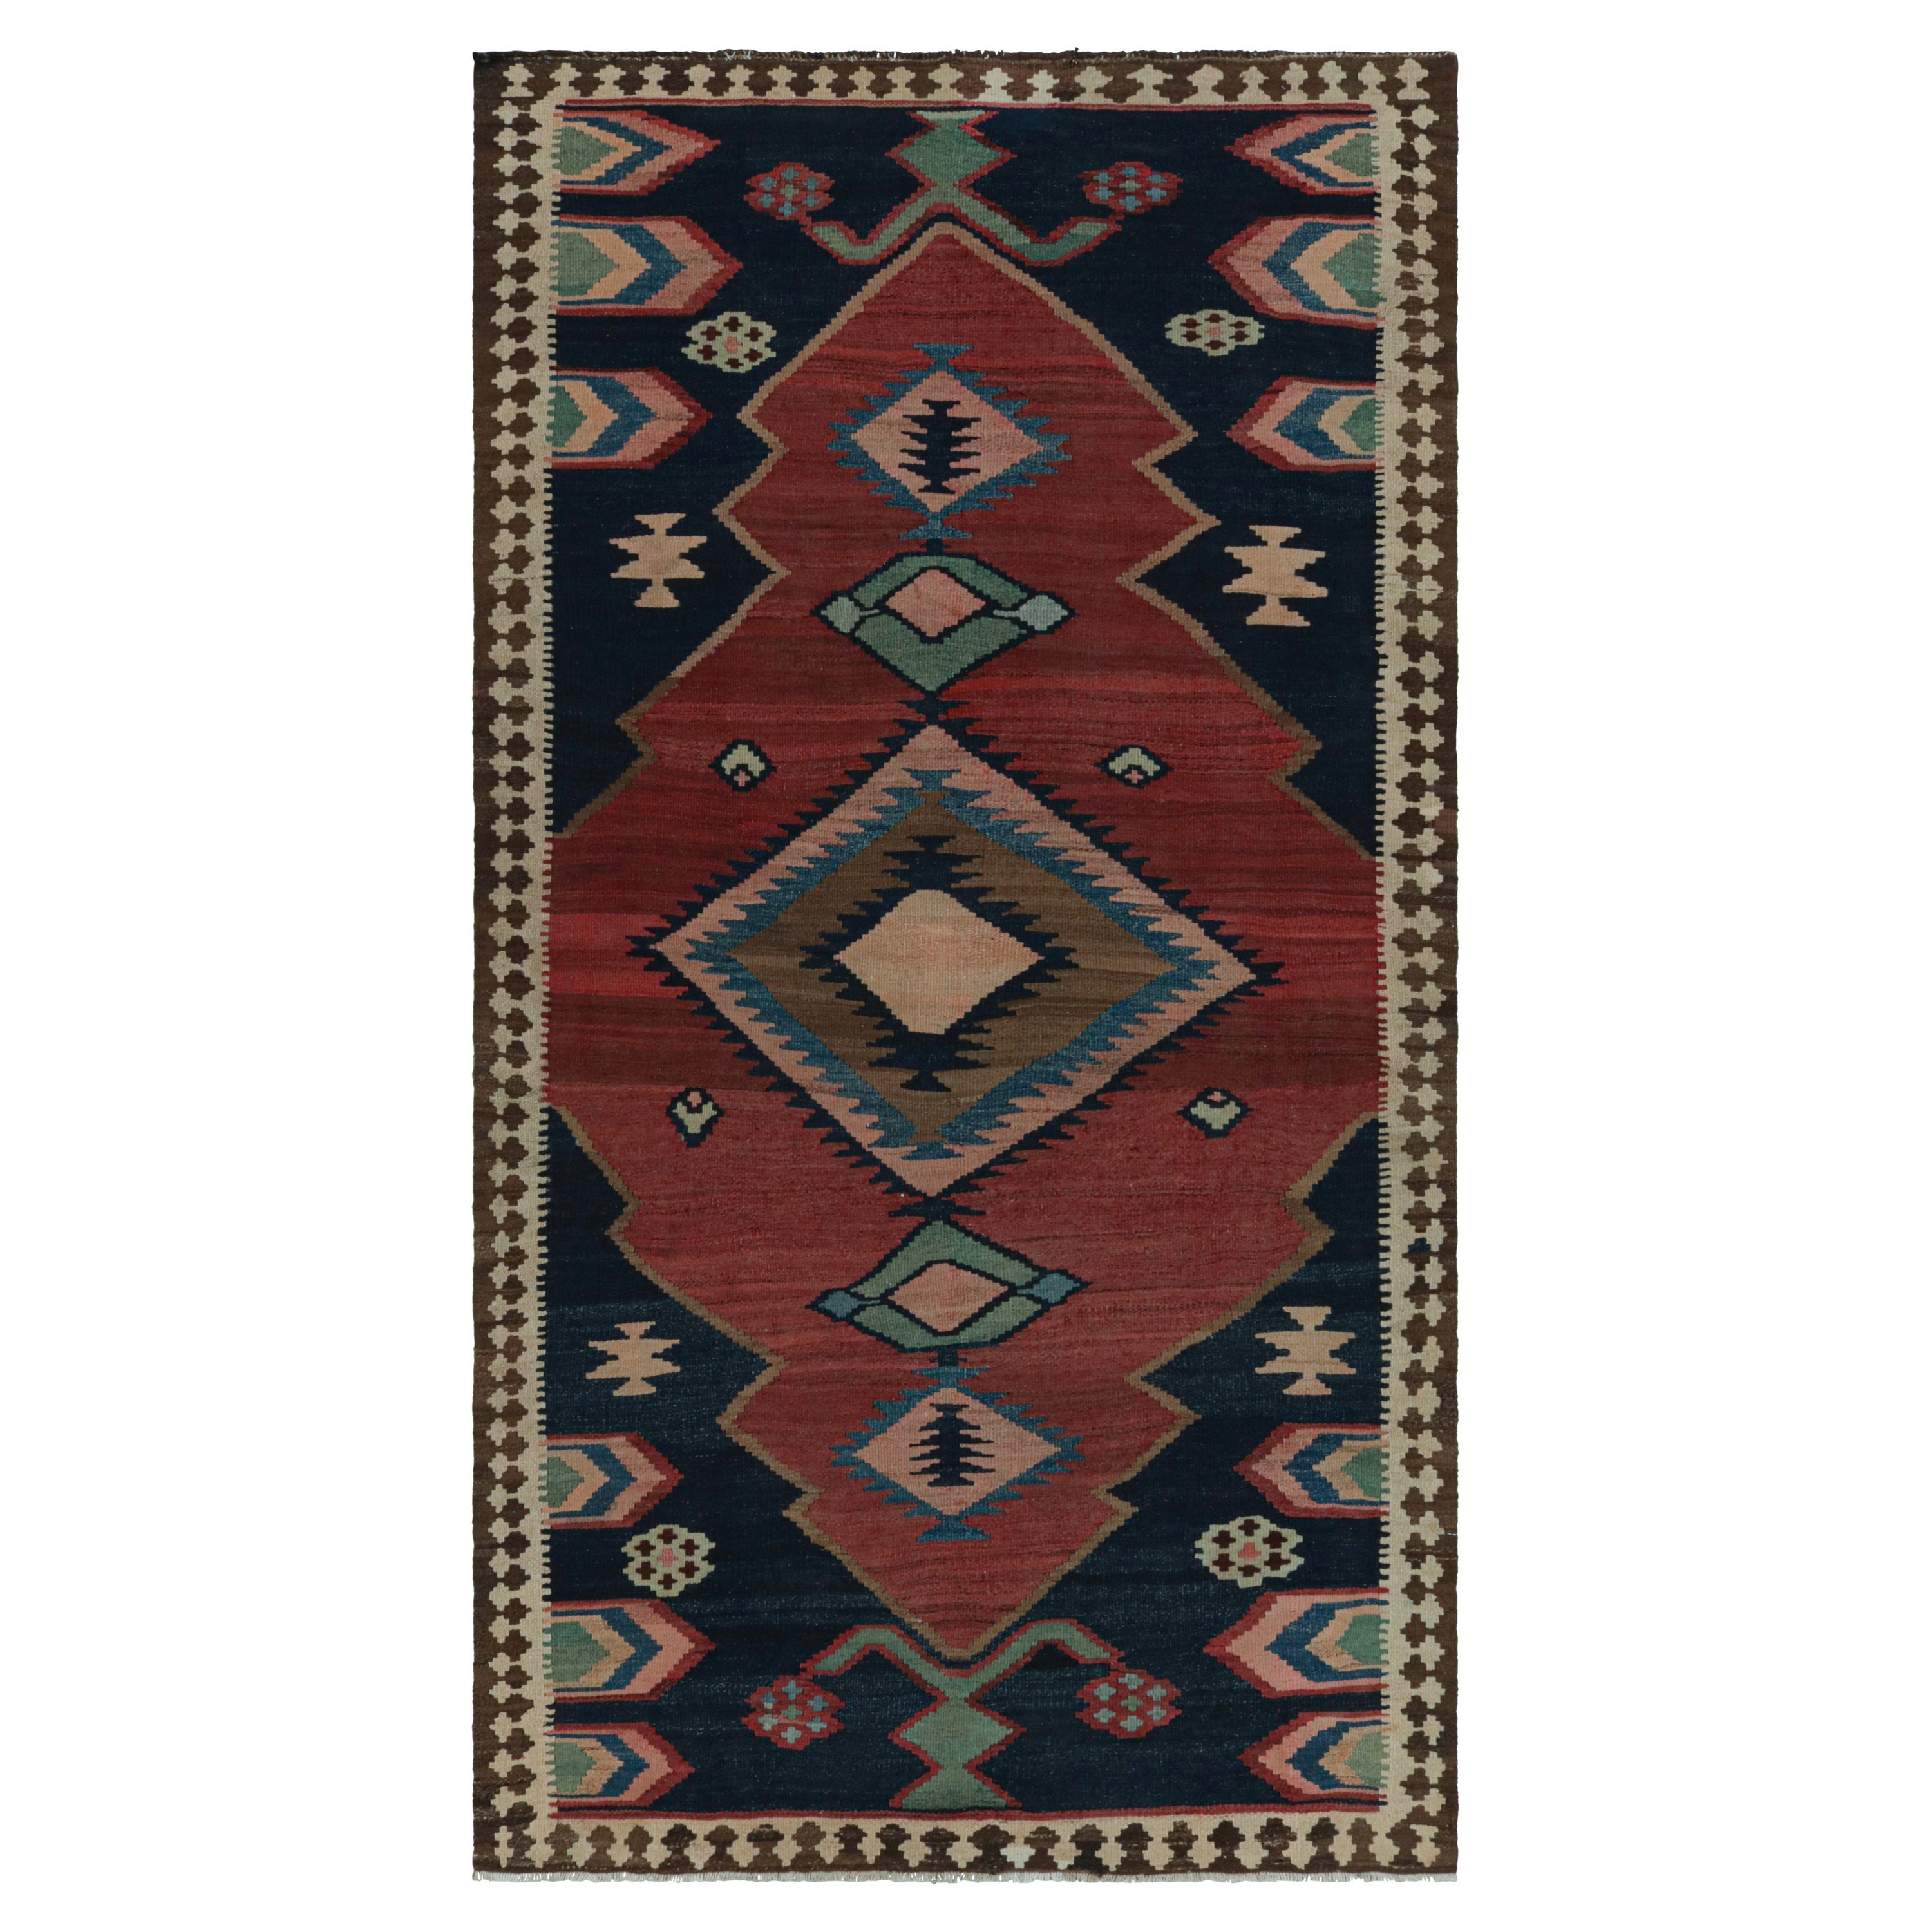 Vintage Afghani tribal Kilim rug, with Open Field and Medallion, Rug & Kilim